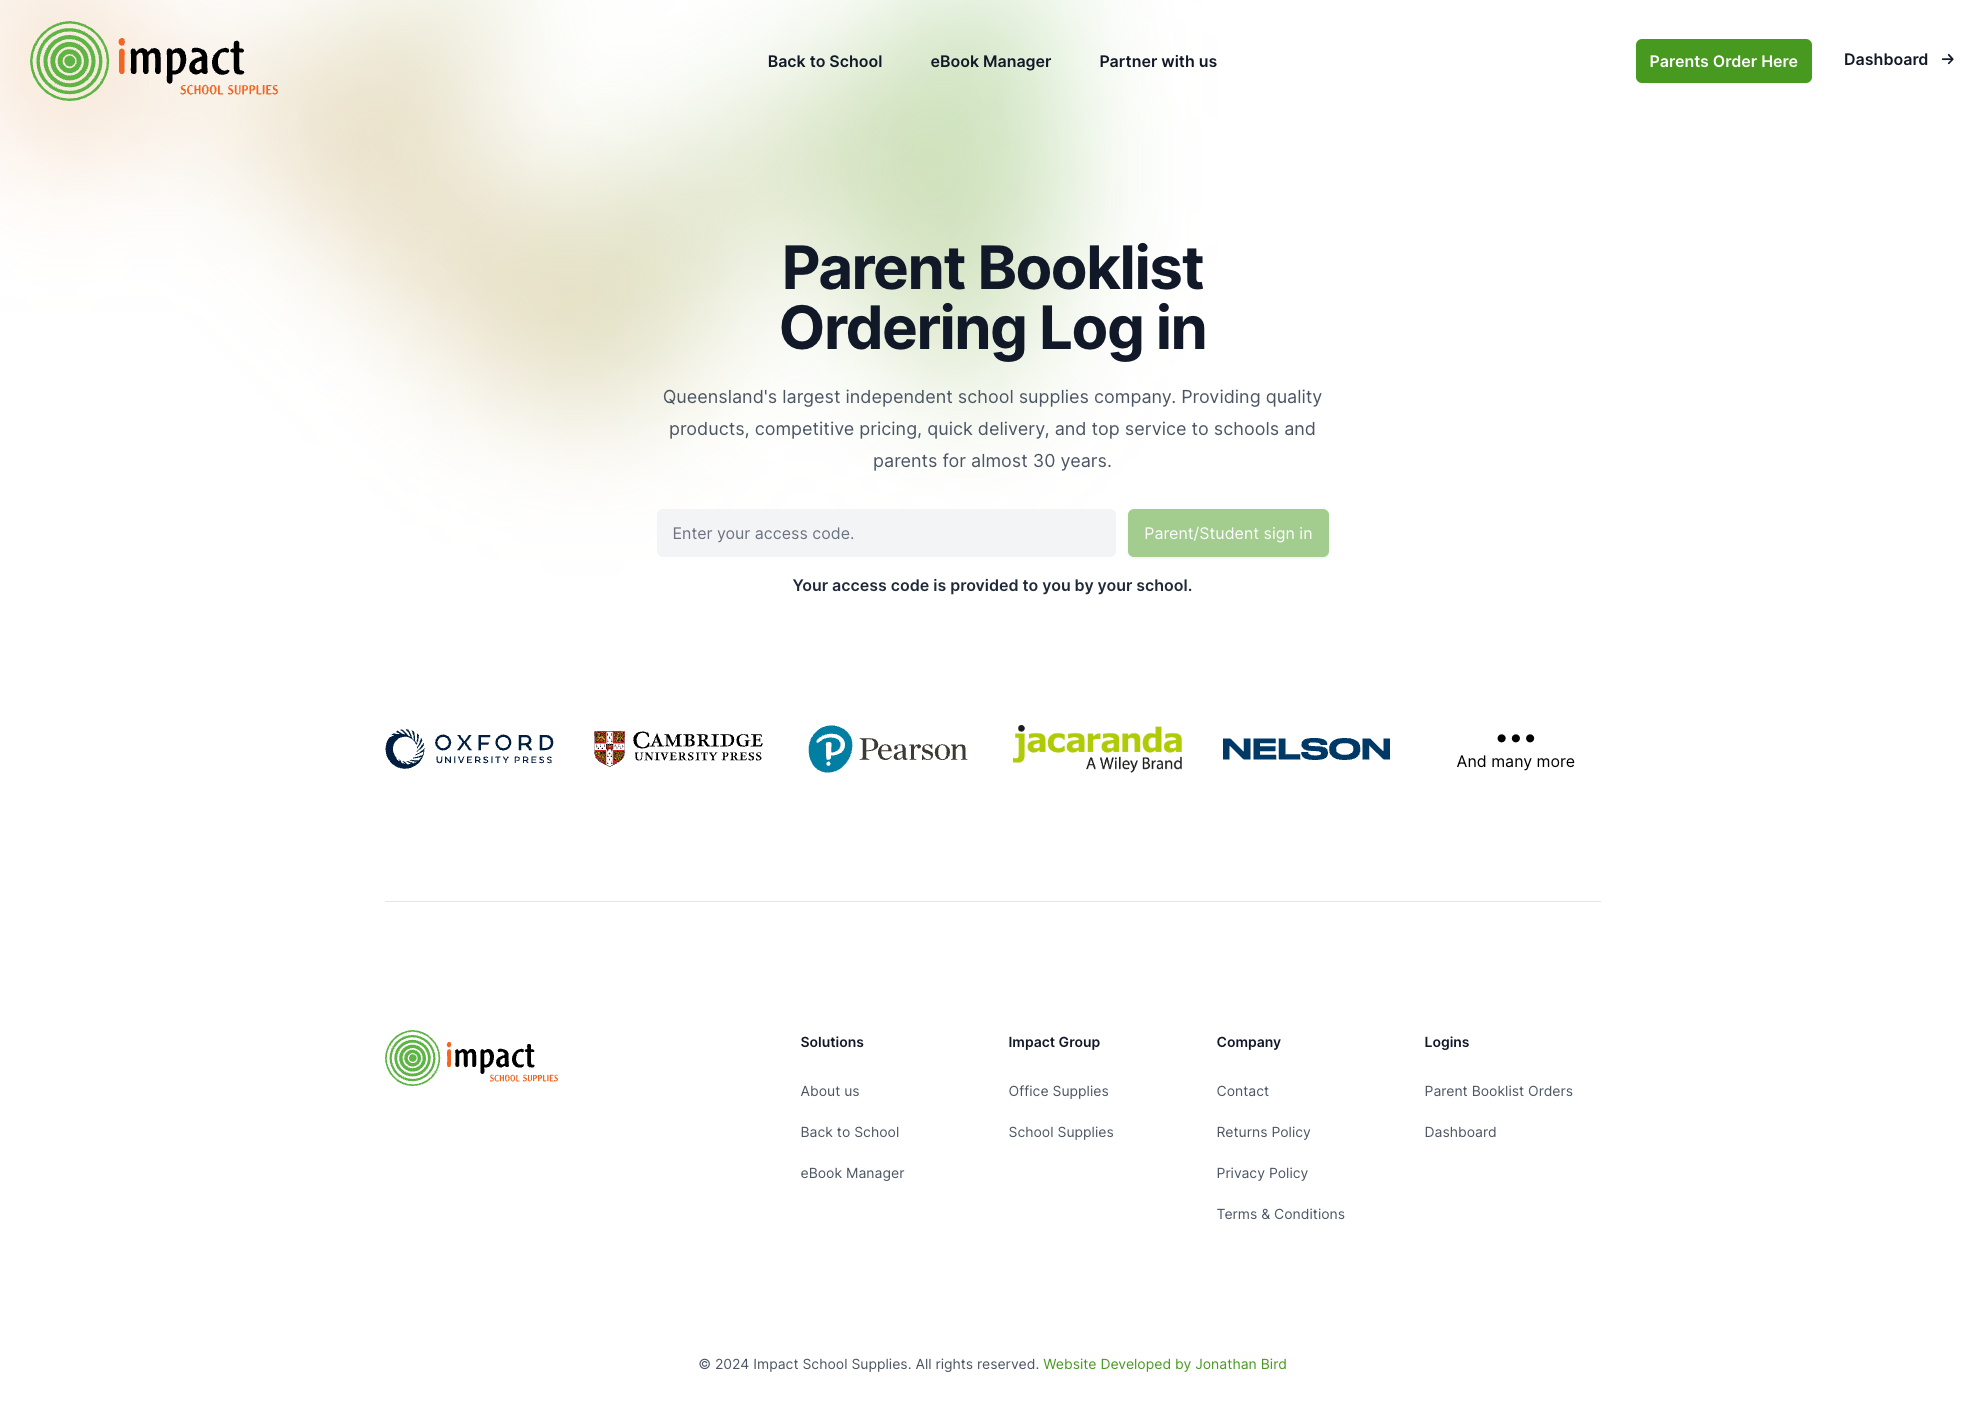 Impact School Supplies Parent Booklist Design